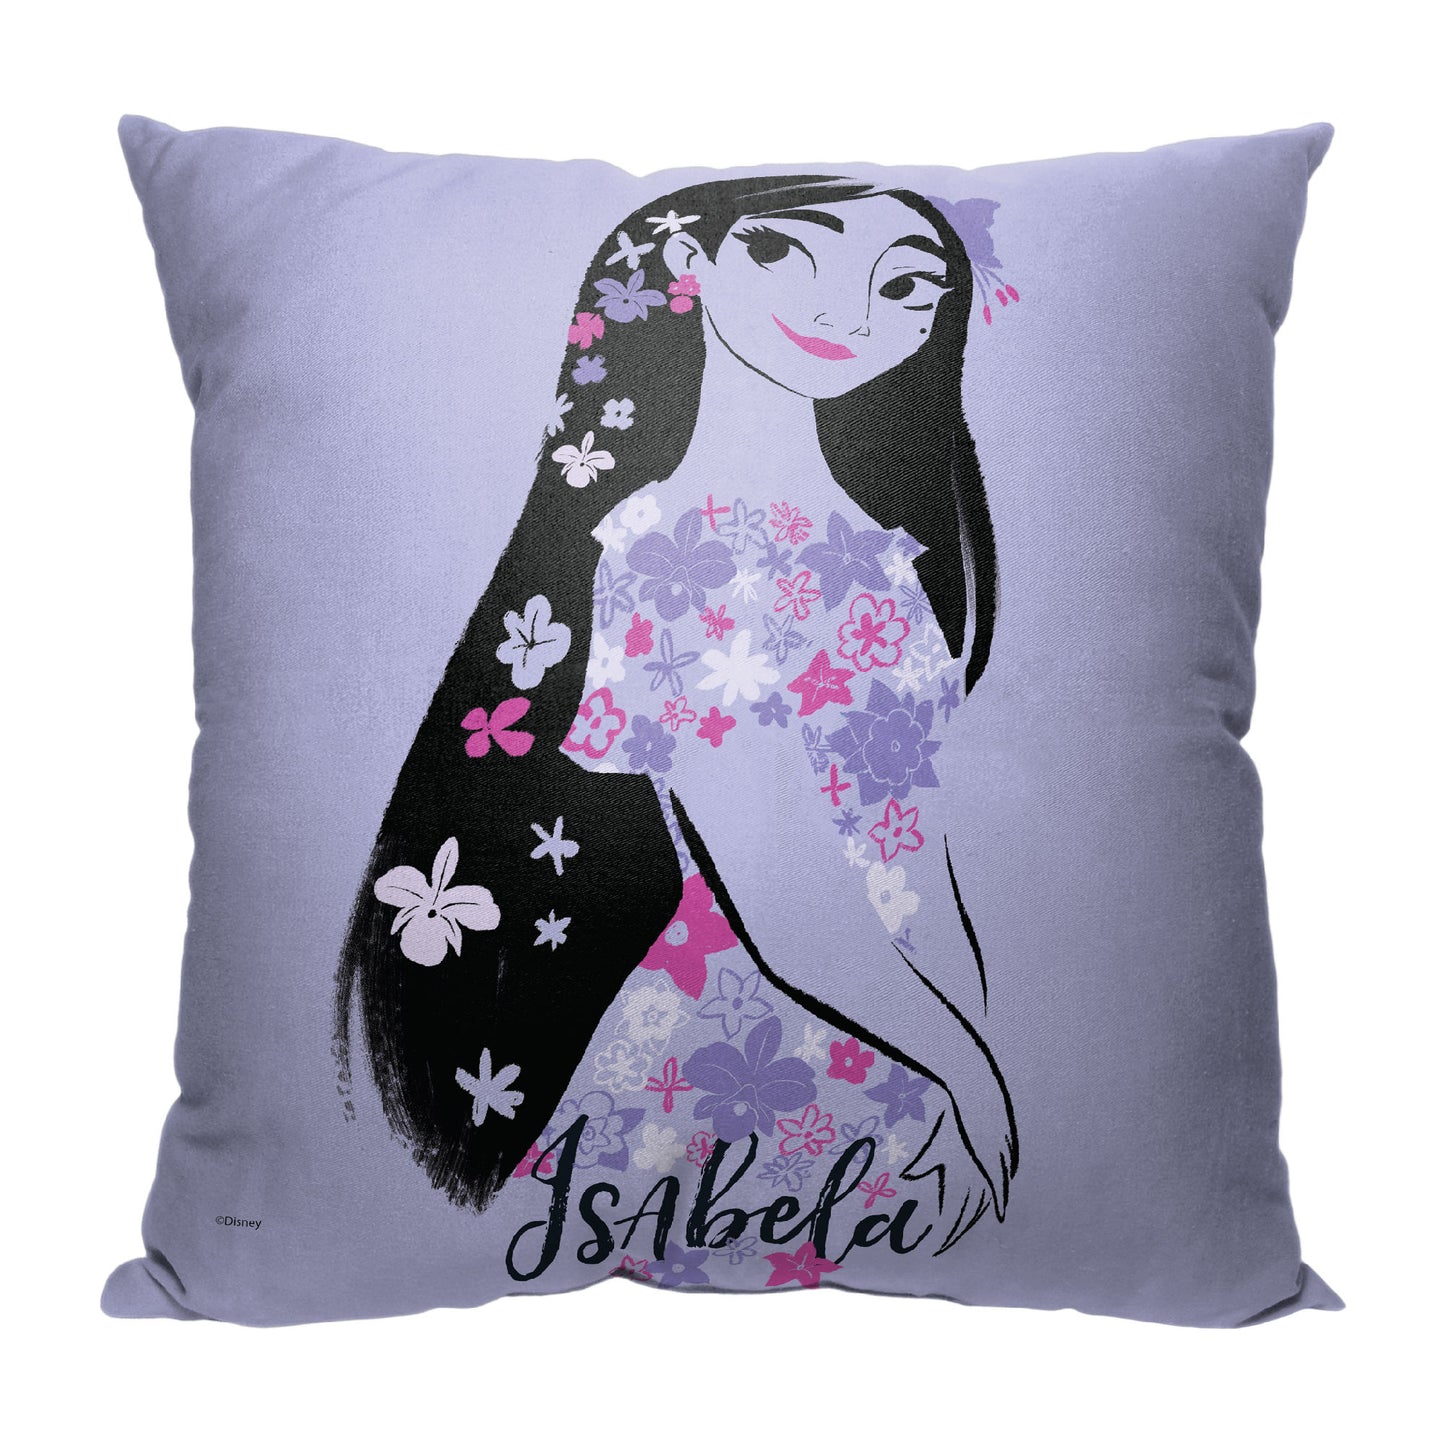 Disney's Encanto;  Flower Isabella Pillow;  18" x 18"